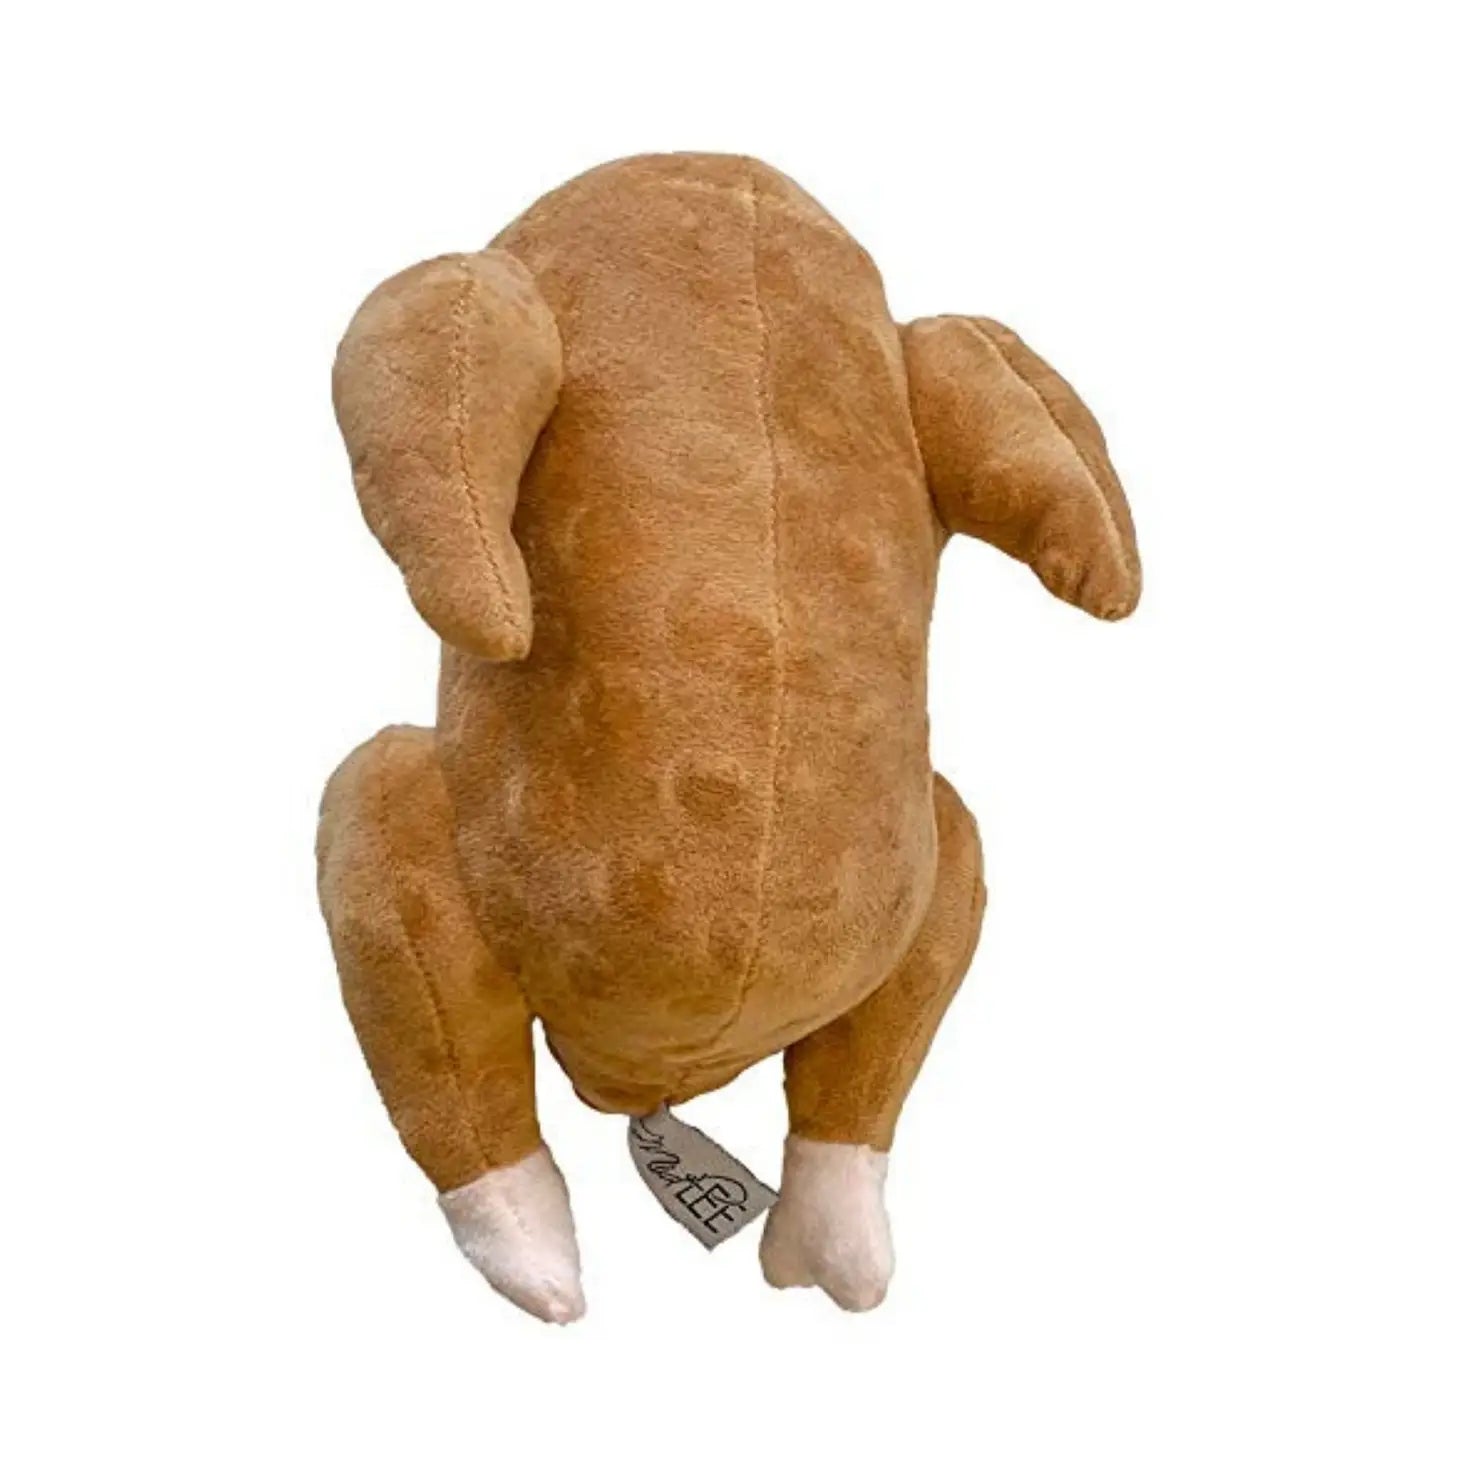 Midlee - Turkey Plush Dog Toy